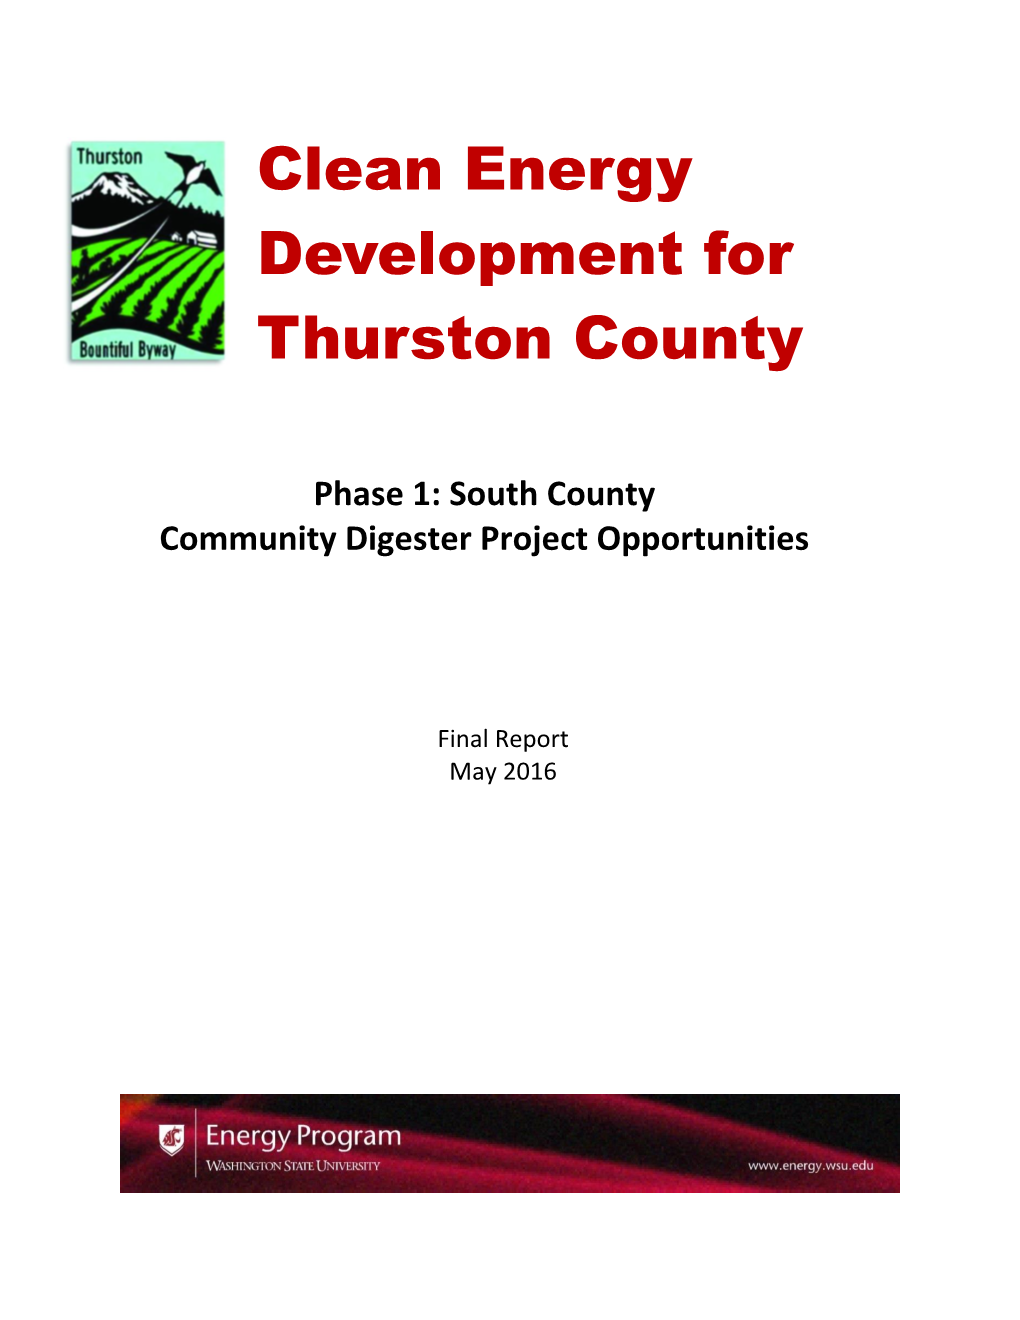 Clean Energy Development for Thurston County